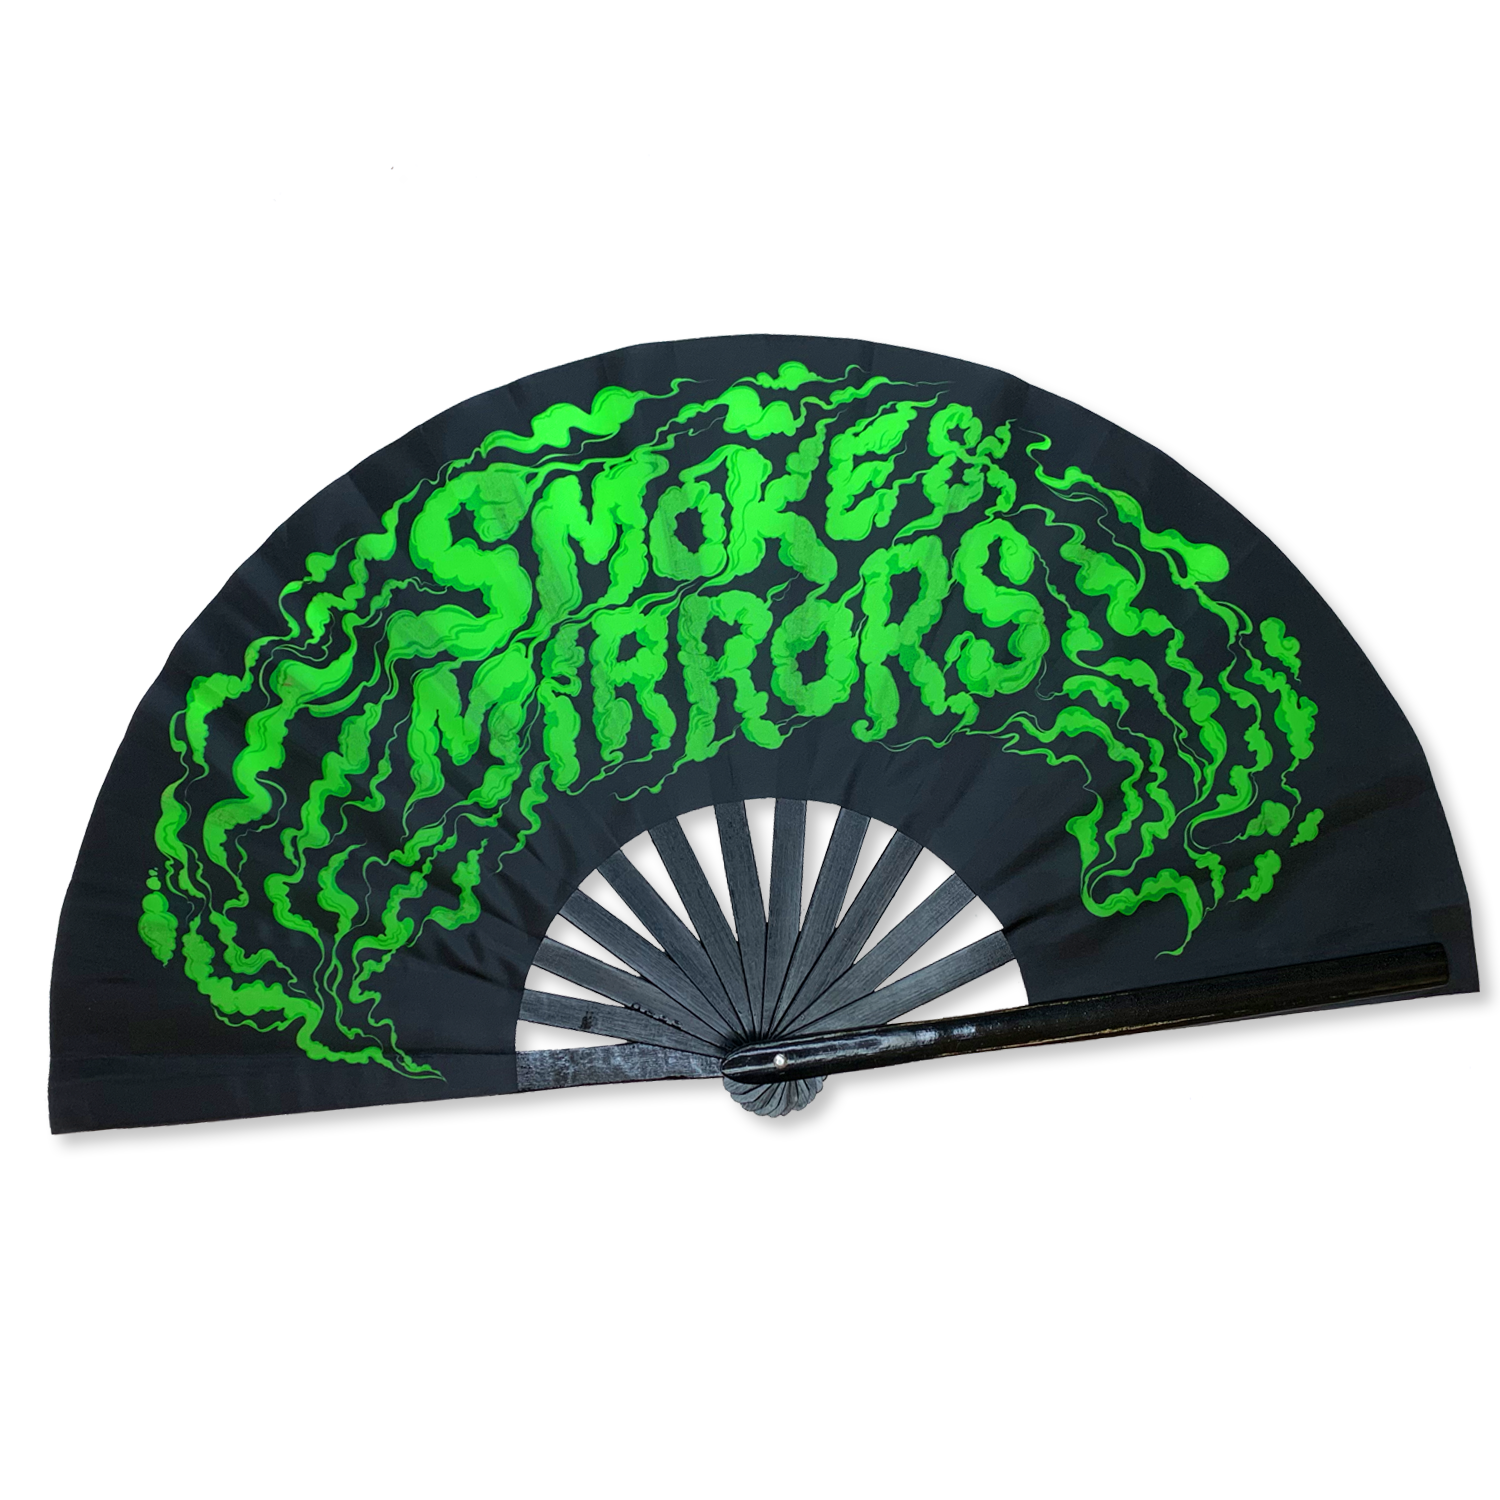 Smoke & Mirrors Fan